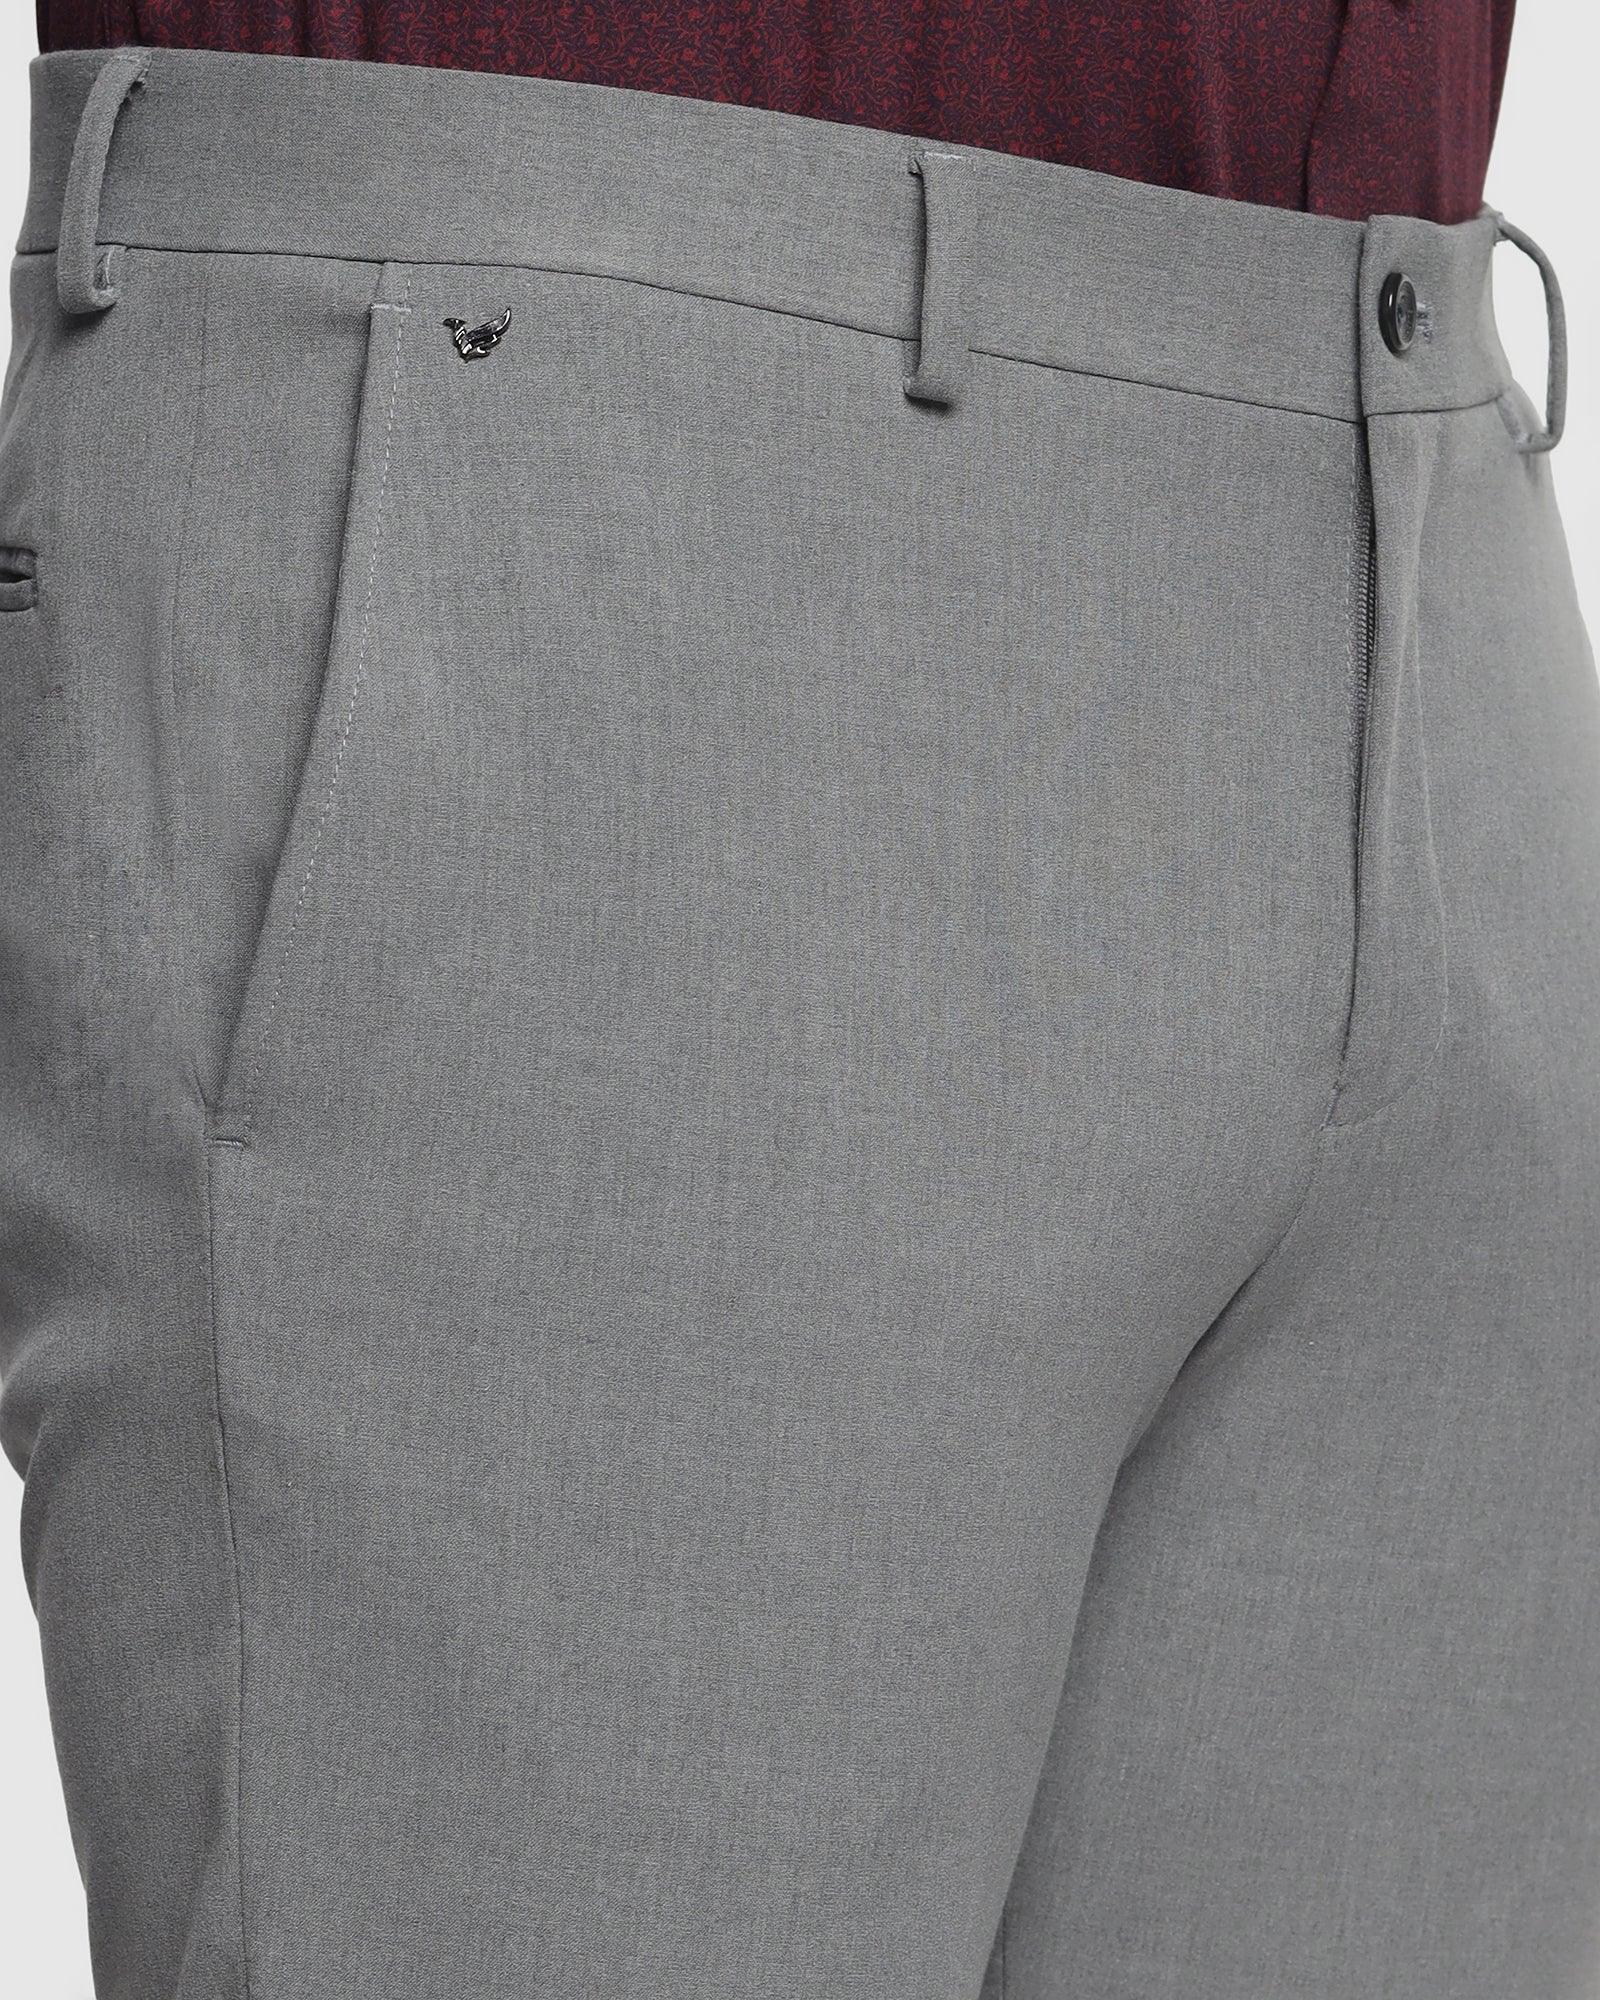 Pant designer side pockets stitching / boy pant cross pockets design / sew  designer cross pockets / - YouTube